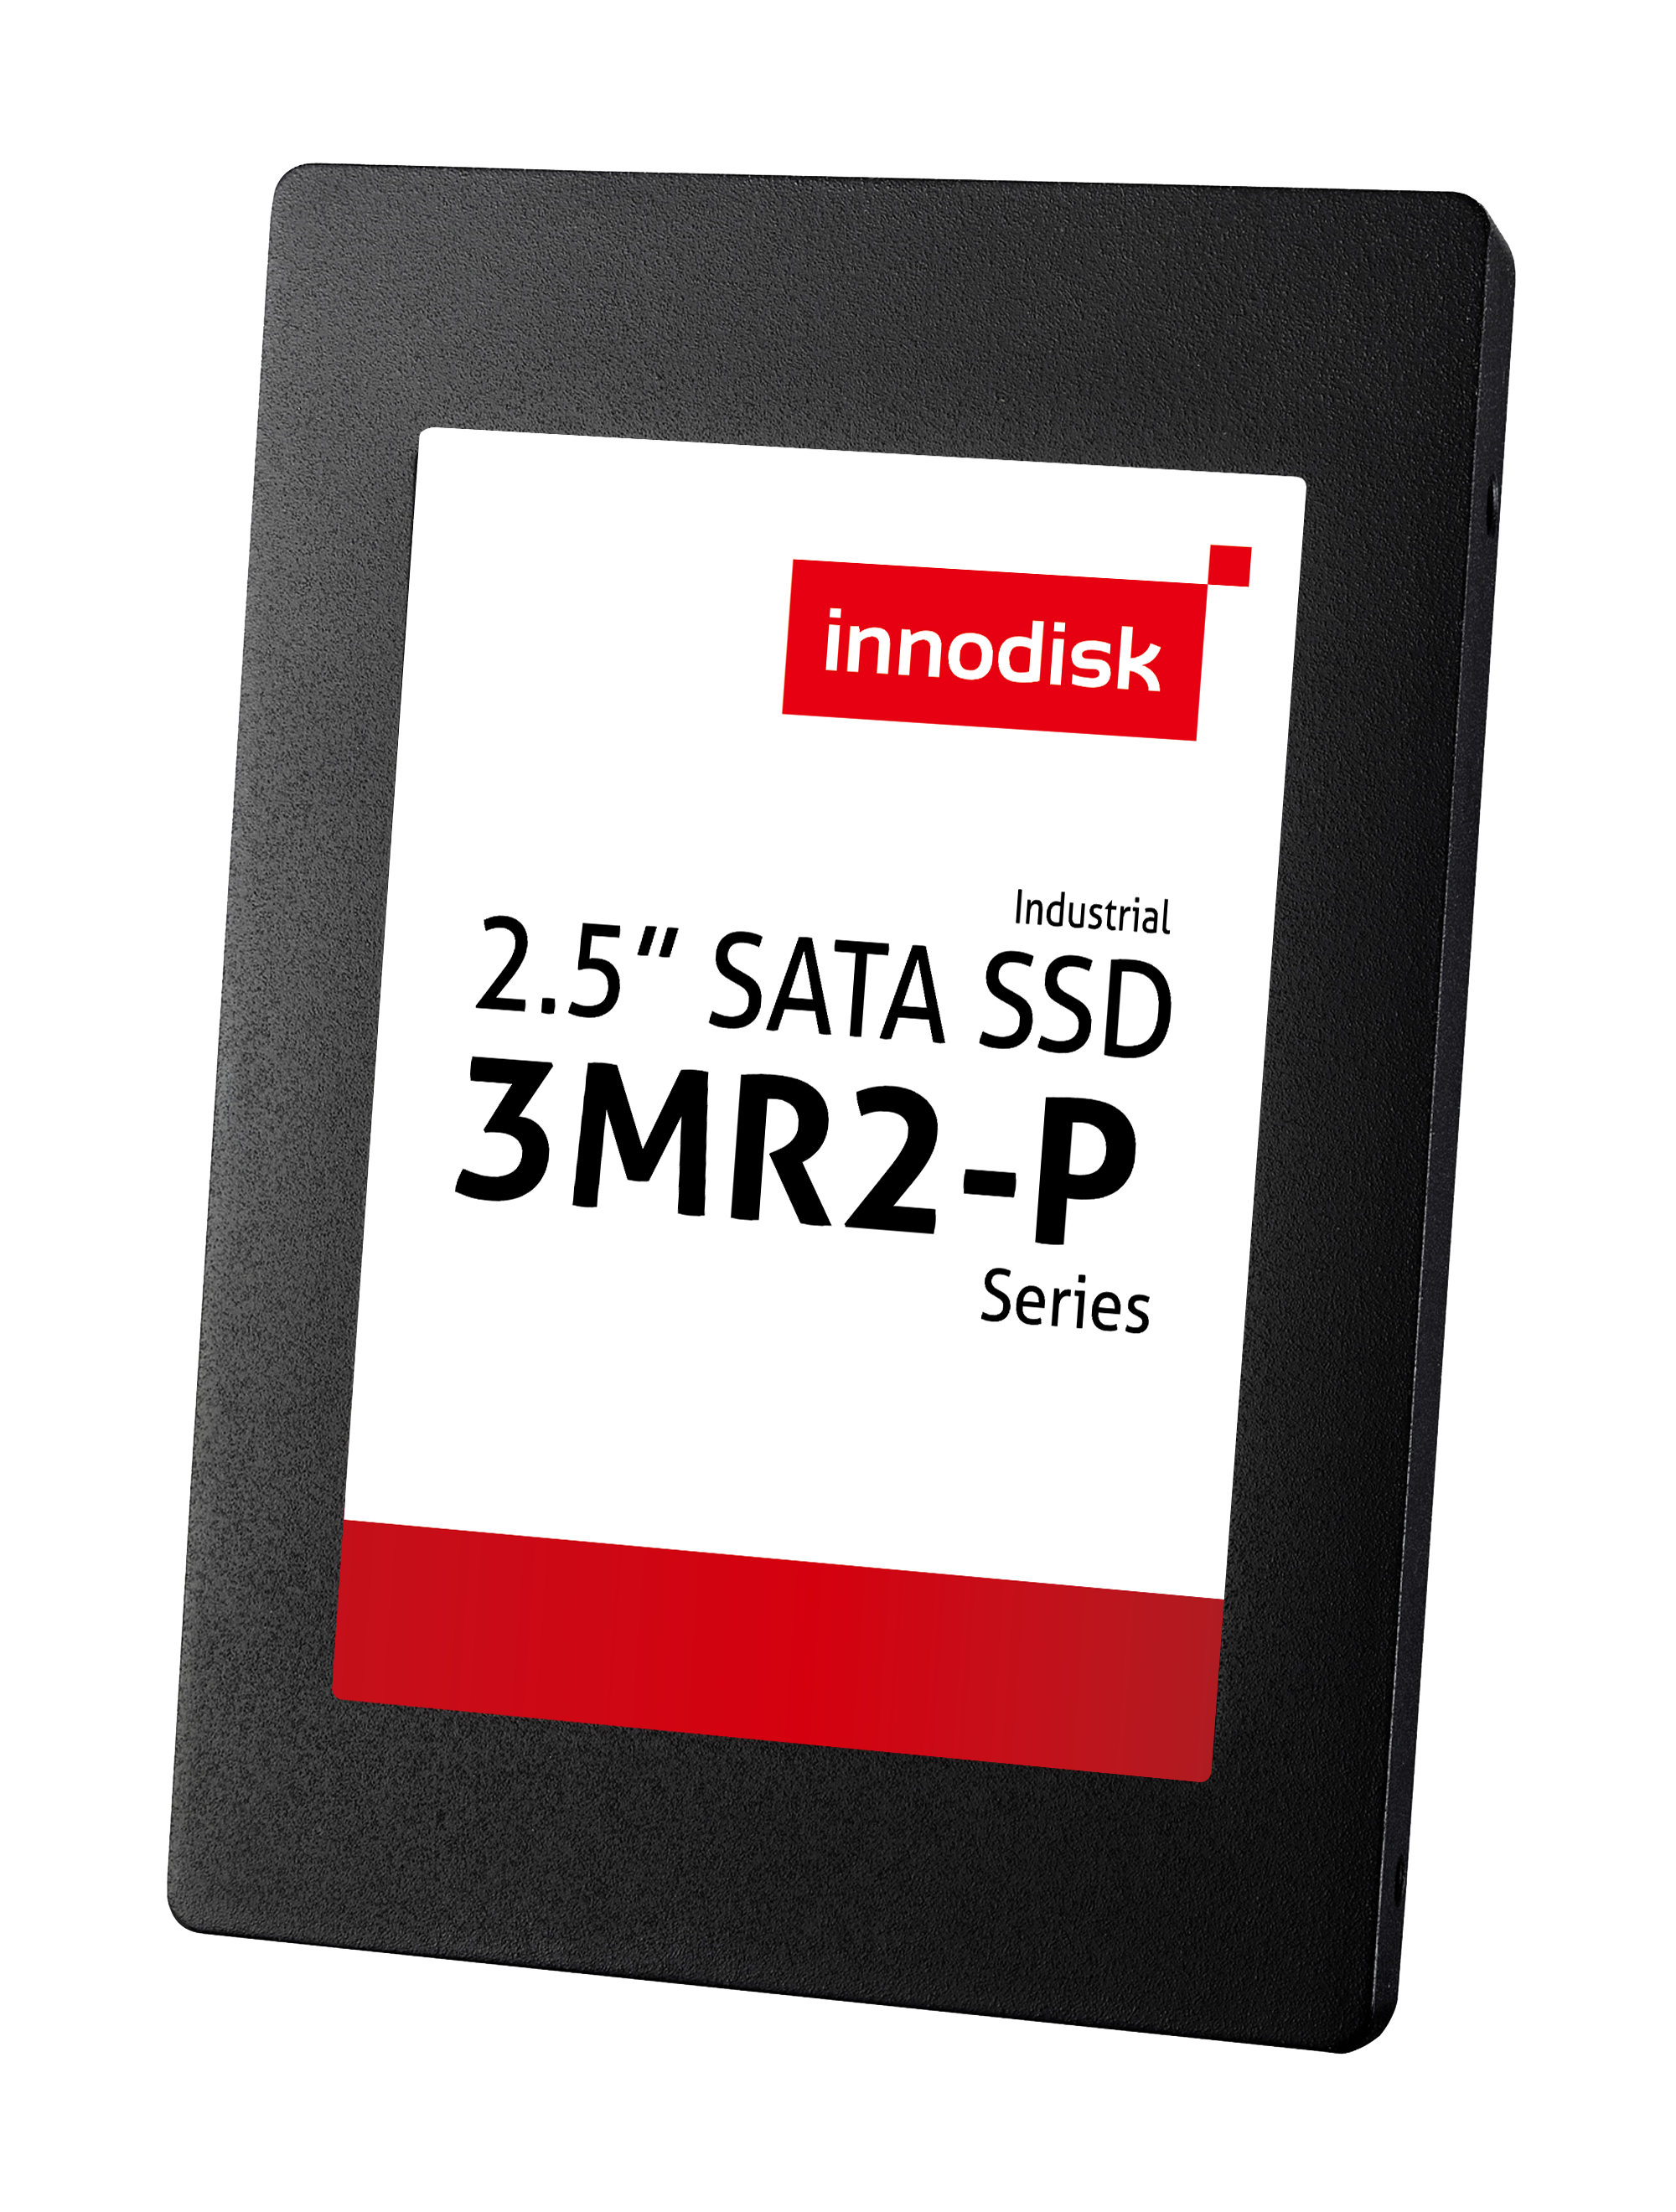 2.5" SATA SSD InnoRobust, 3MR2-P,MLC